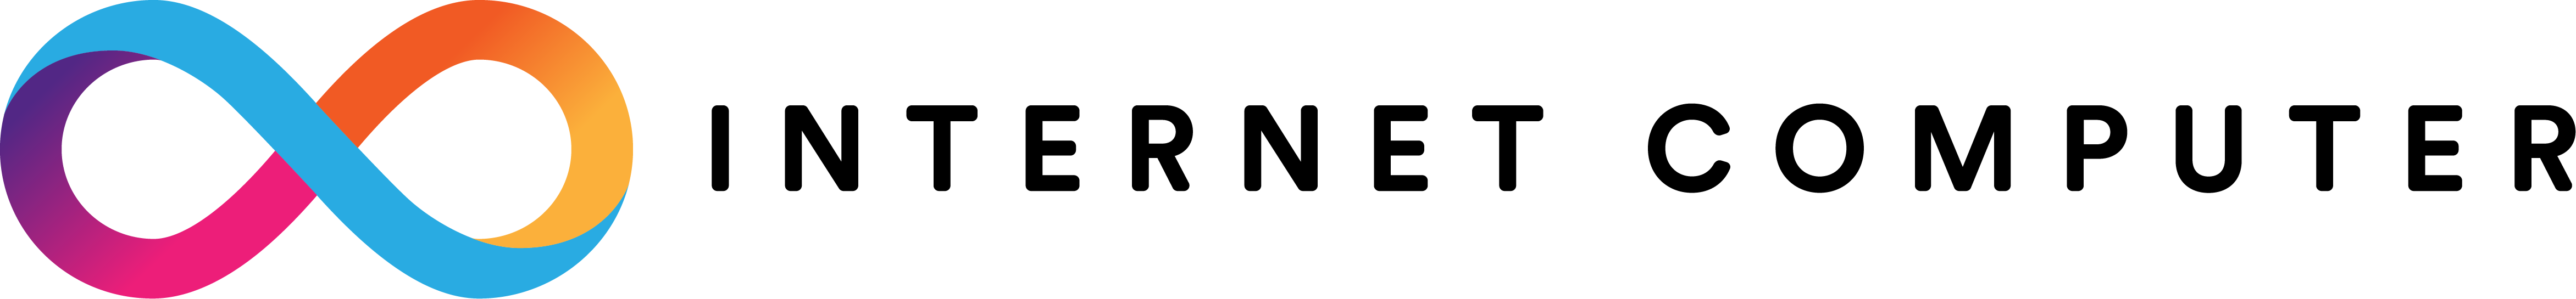 Internet Computer Logo.png